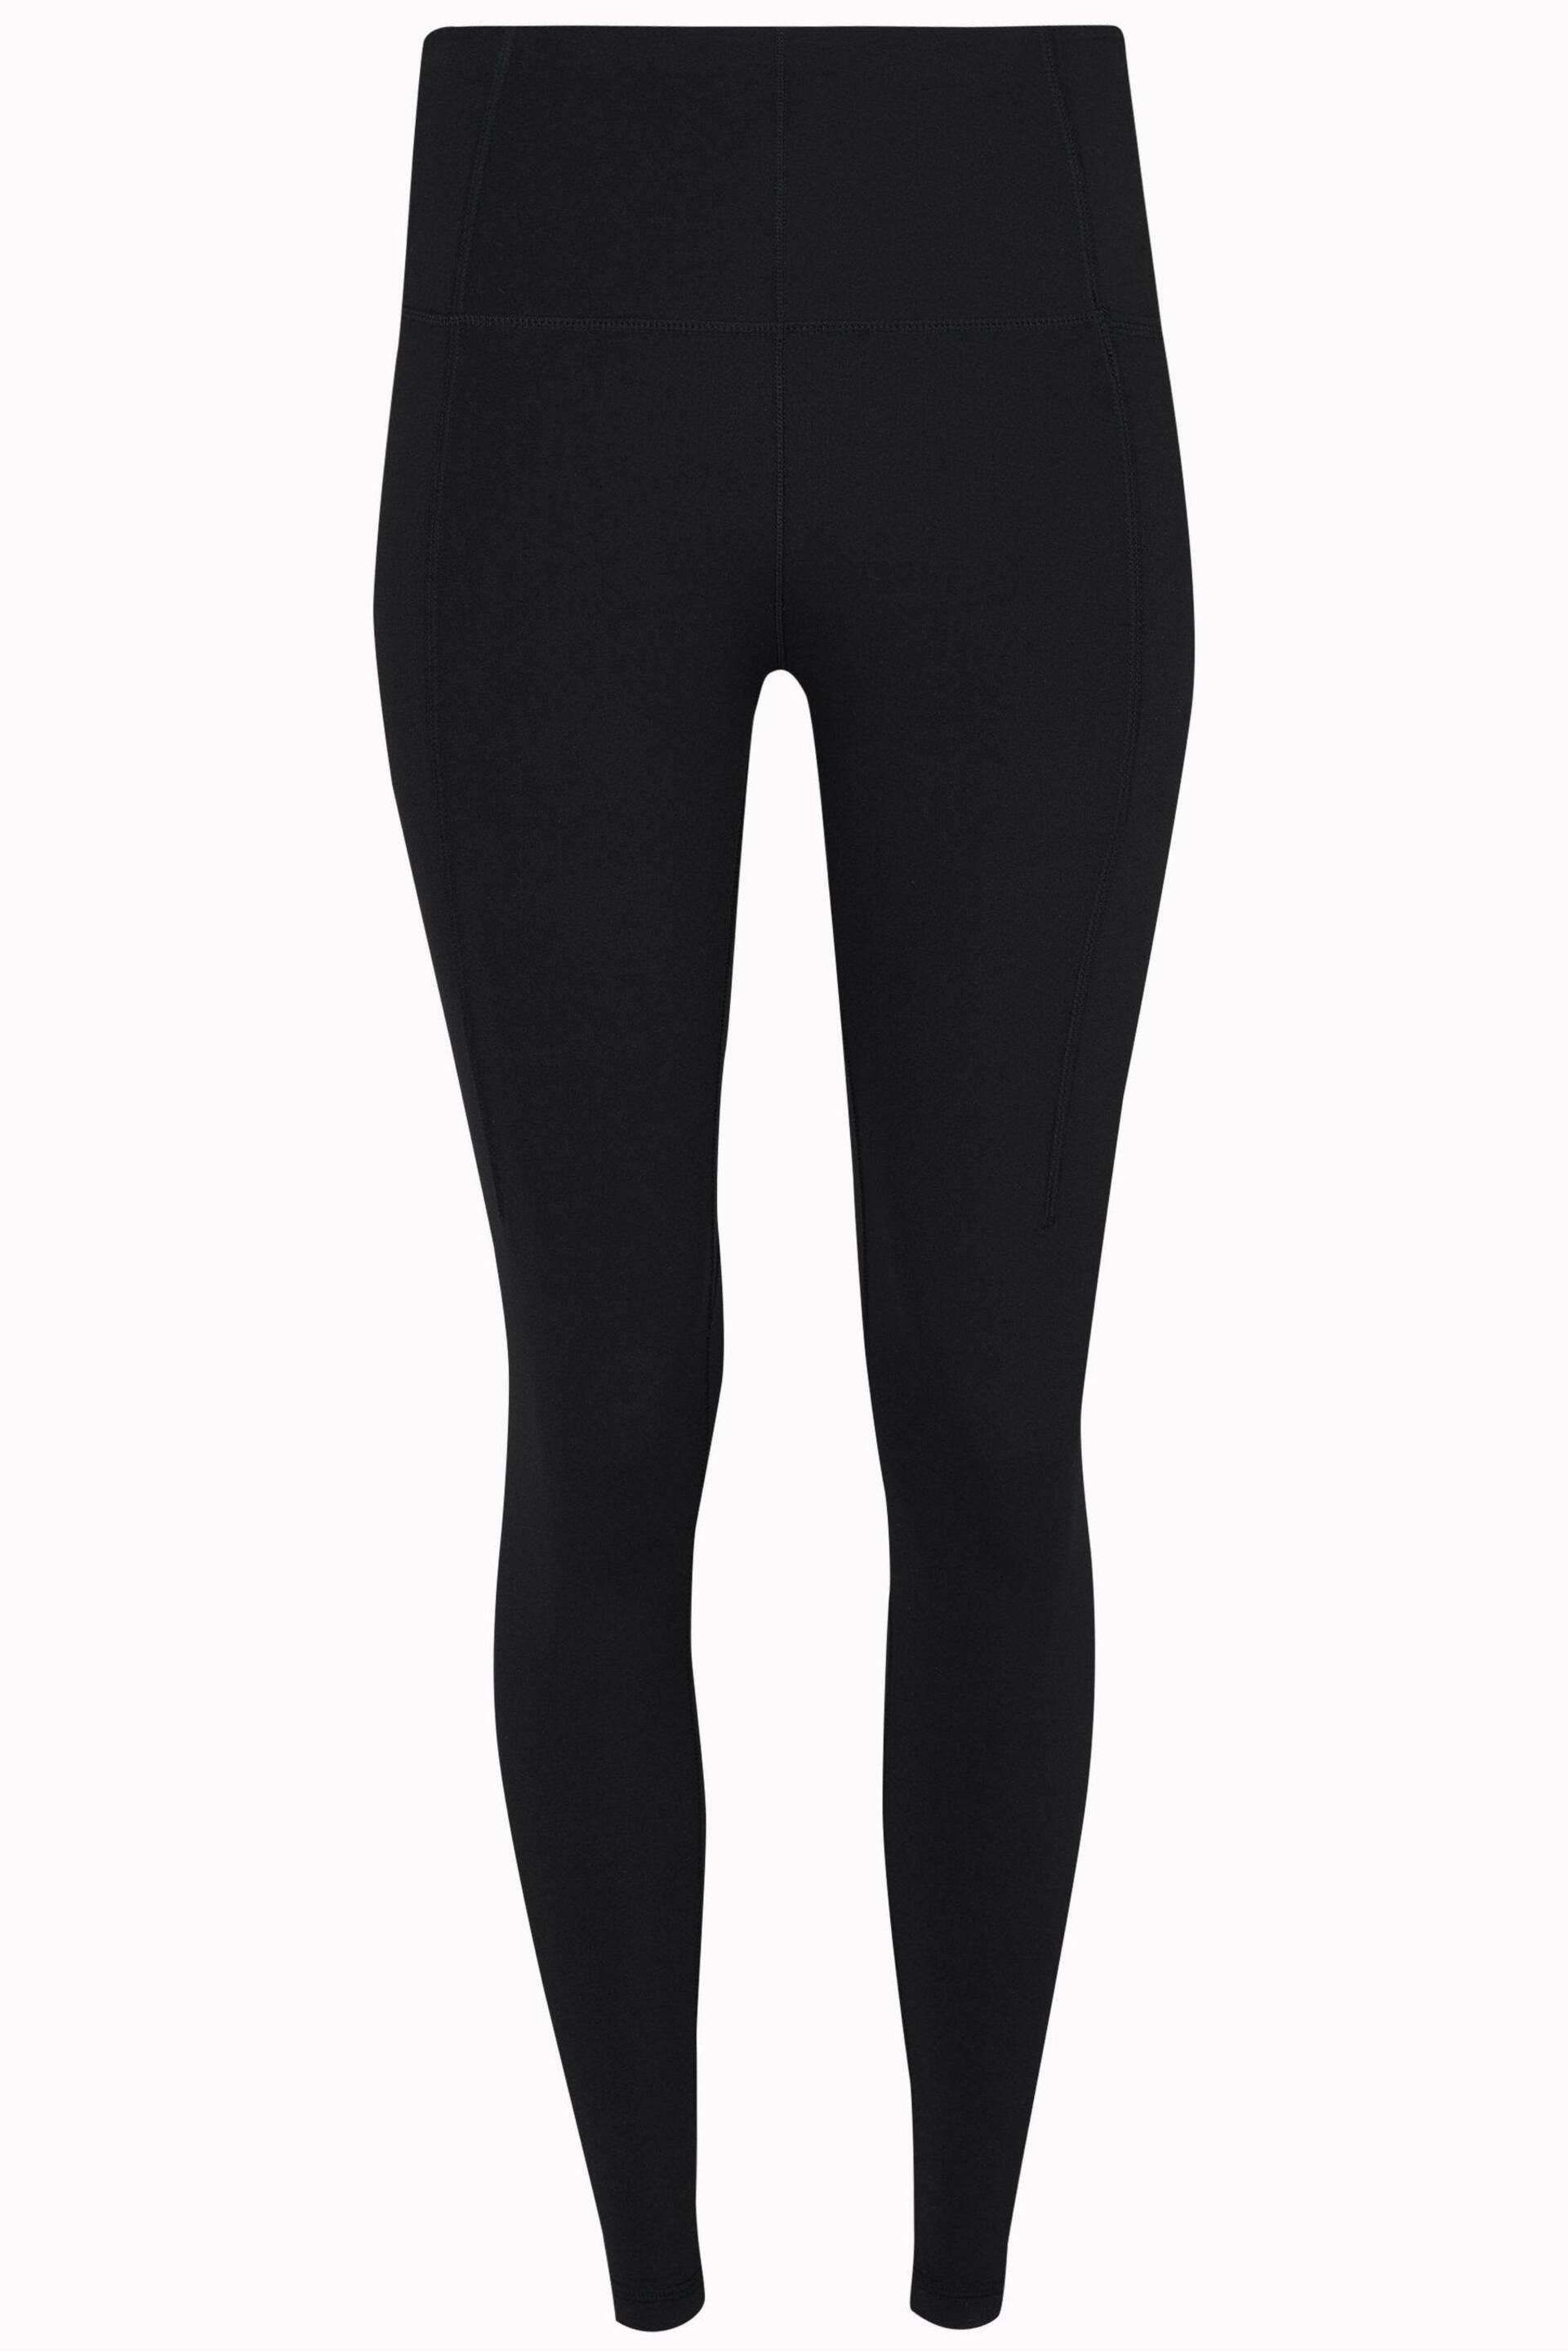 Sweaty Betty Black Full Length Super Soft Yoga Leggings - Image 8 of 8